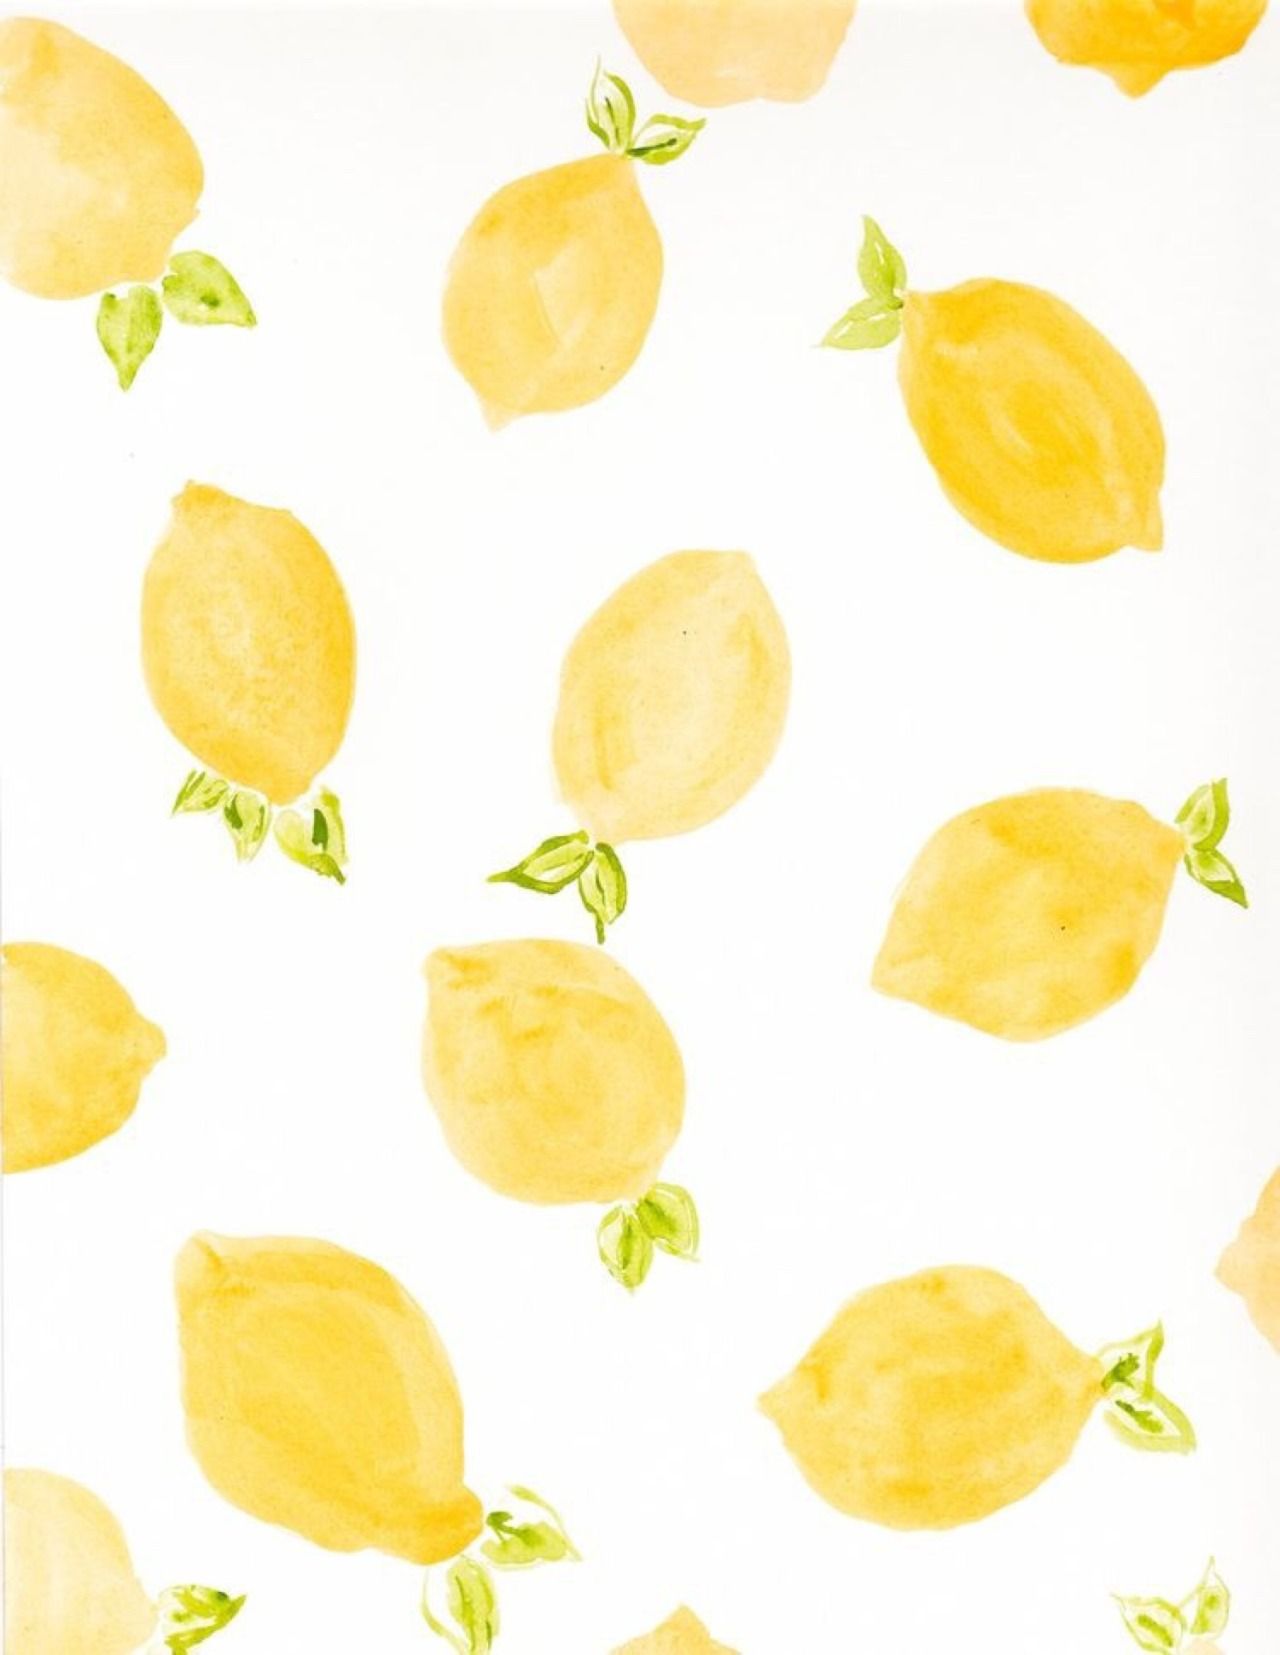 A watercolor painting of lemons on white paper - Lemon